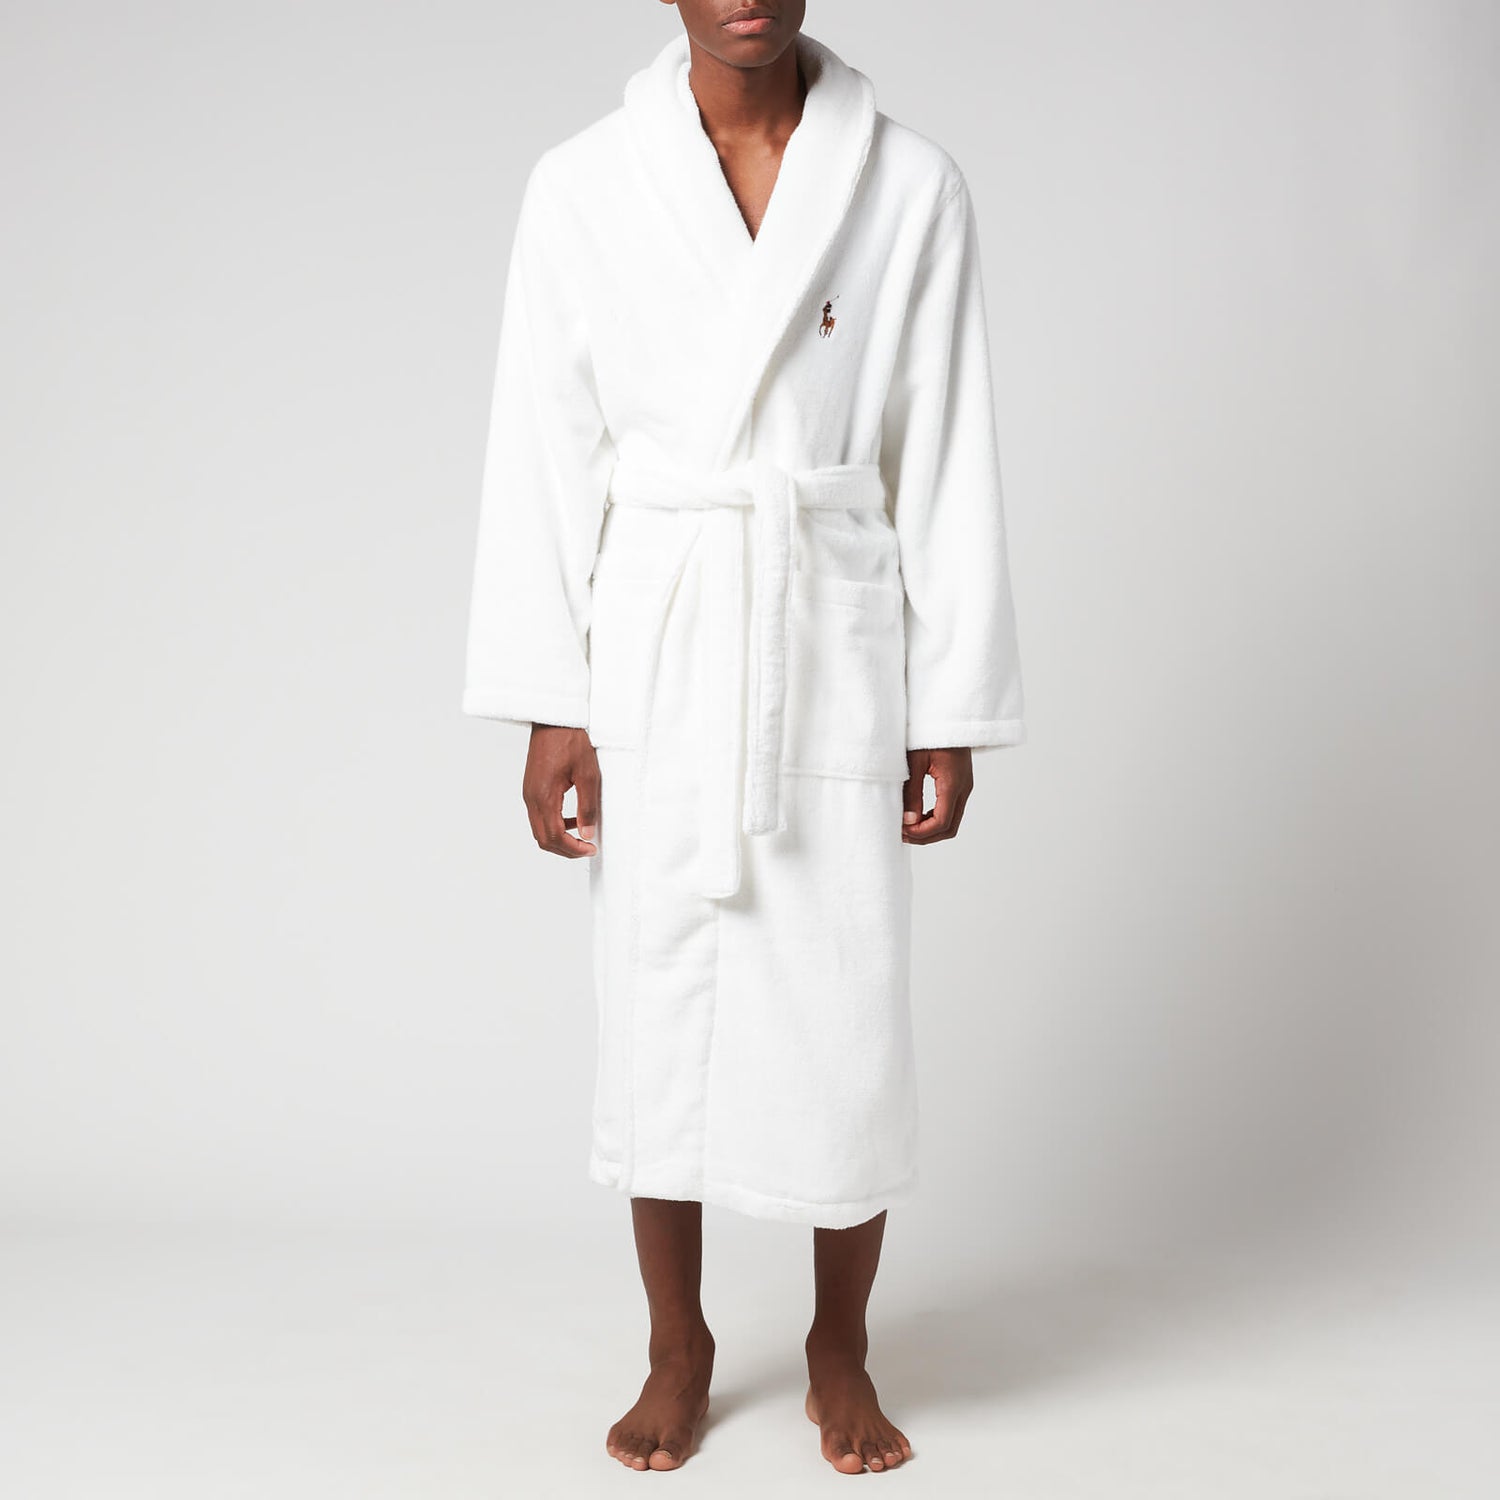 Polo Ralph Lauren Men's Cotton Terry Dressing Gown - White - S/M